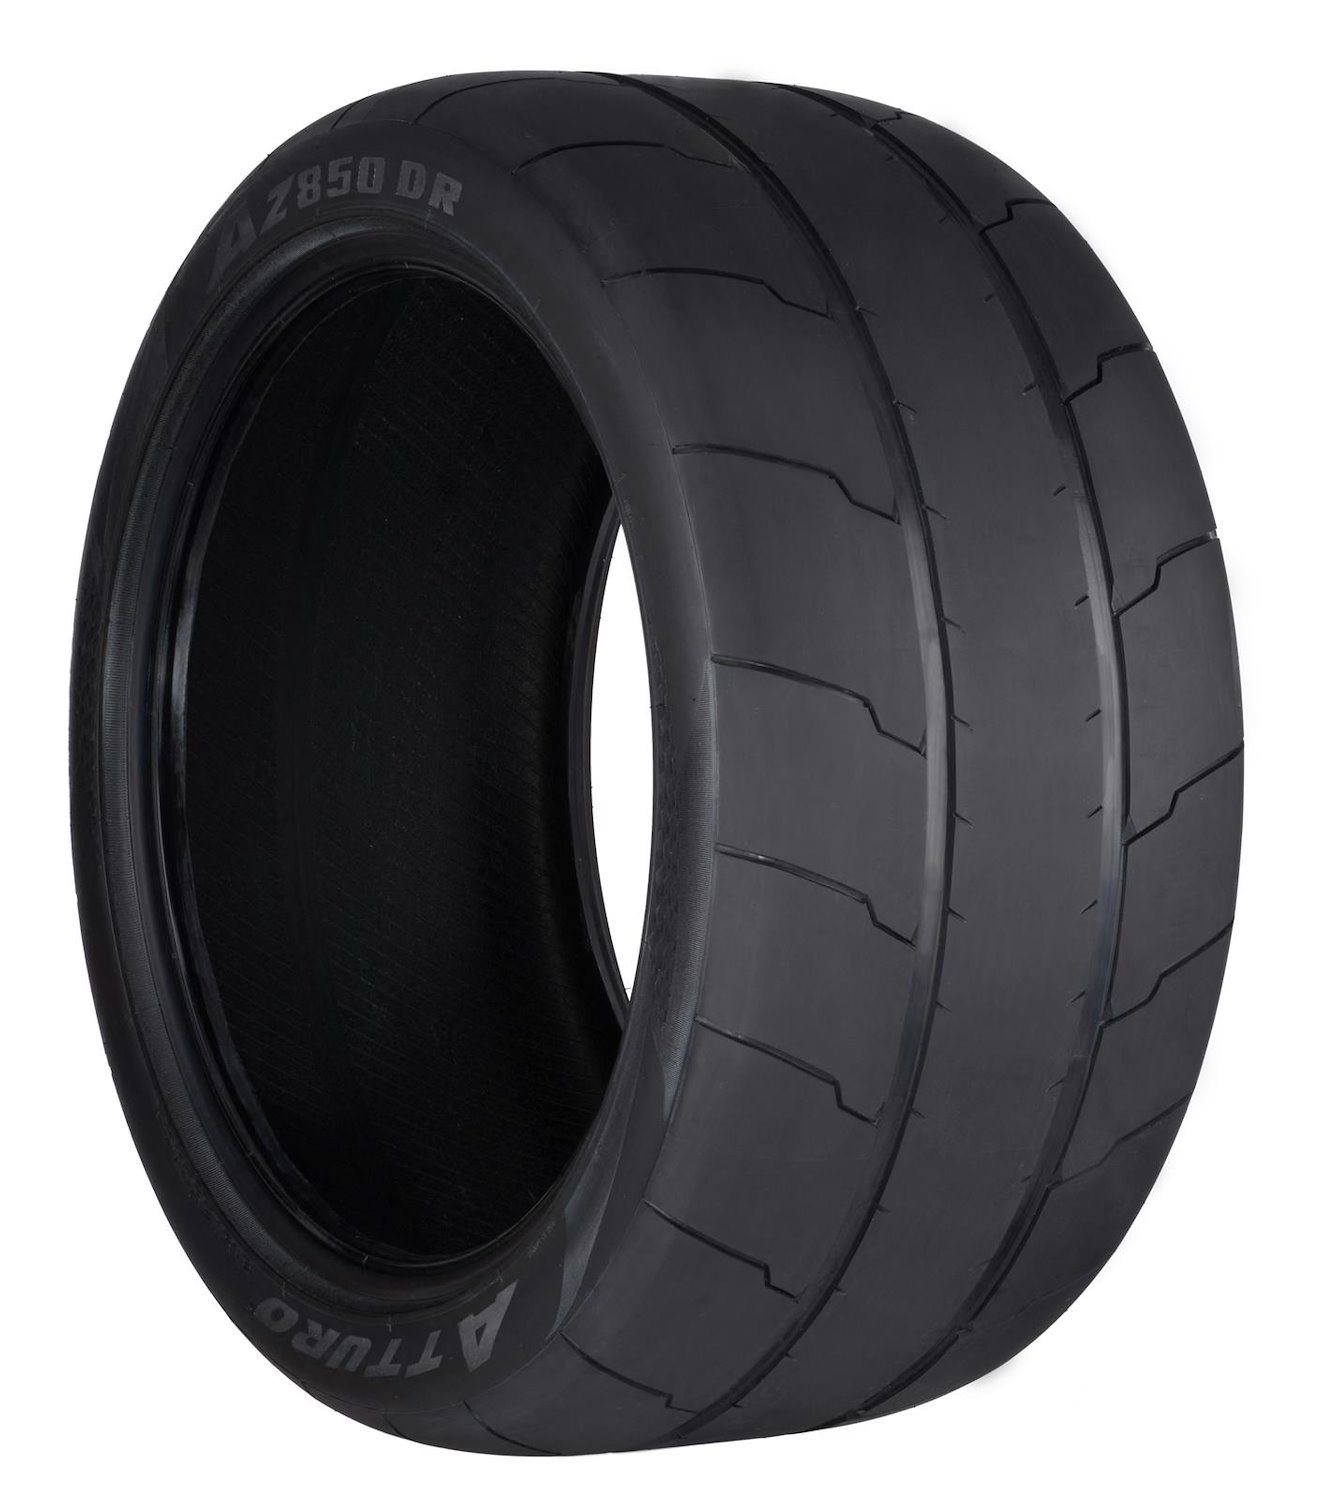 AZ 850 DR Drag Radial Tire, 335/30R20